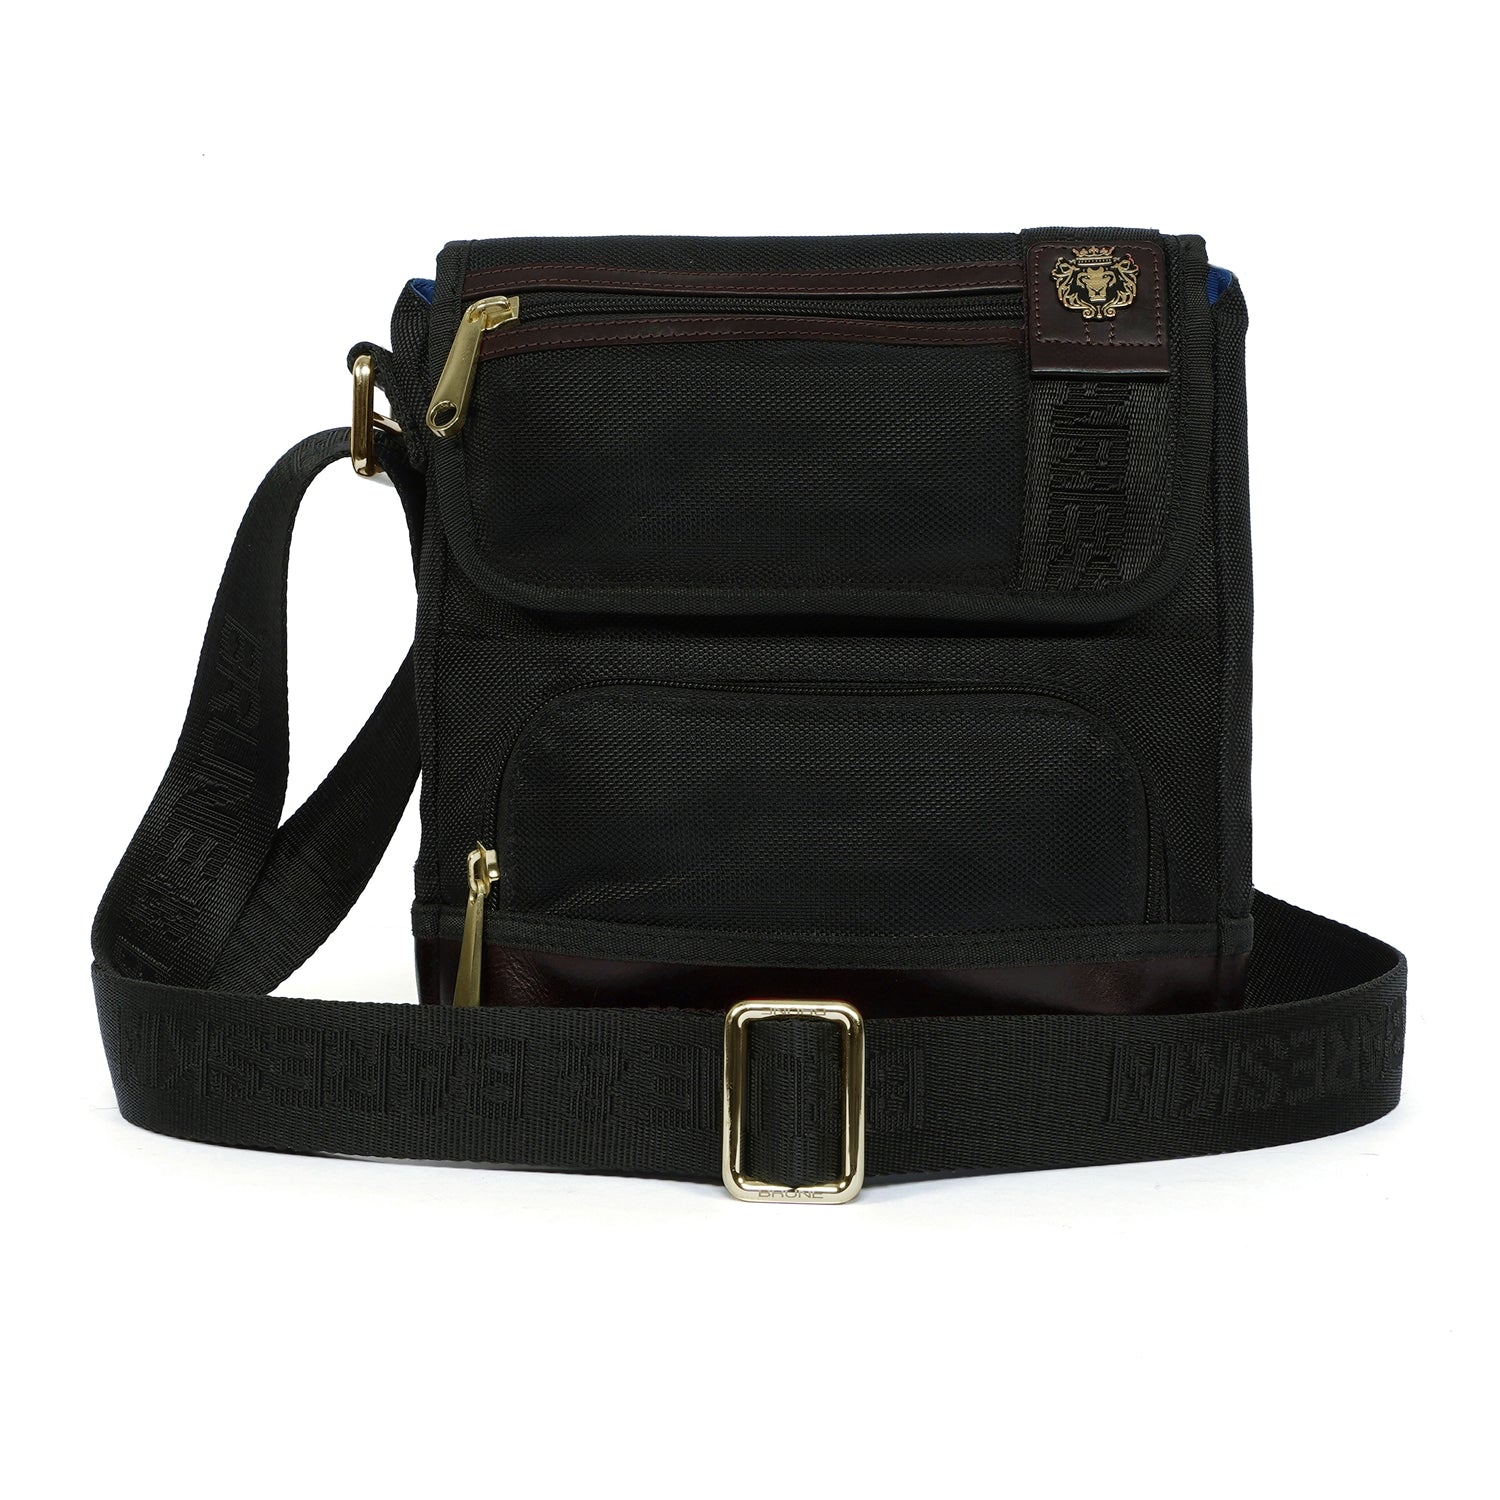 Branded Strap Black Denier Brown Leather Crossbody Bag